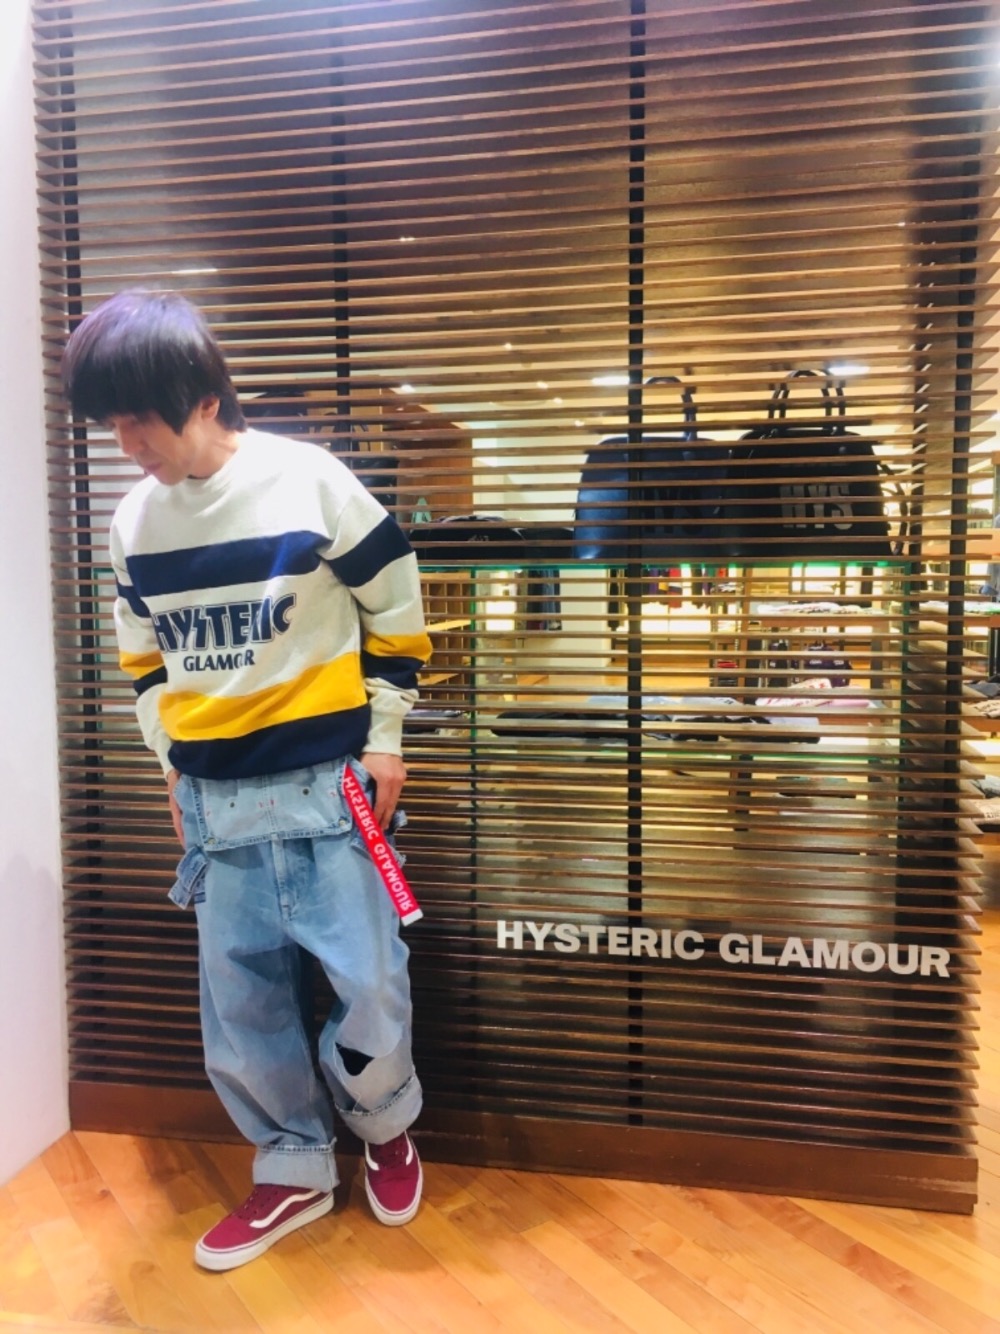 HYSTERIC GLAMOURグランデュオ立川店